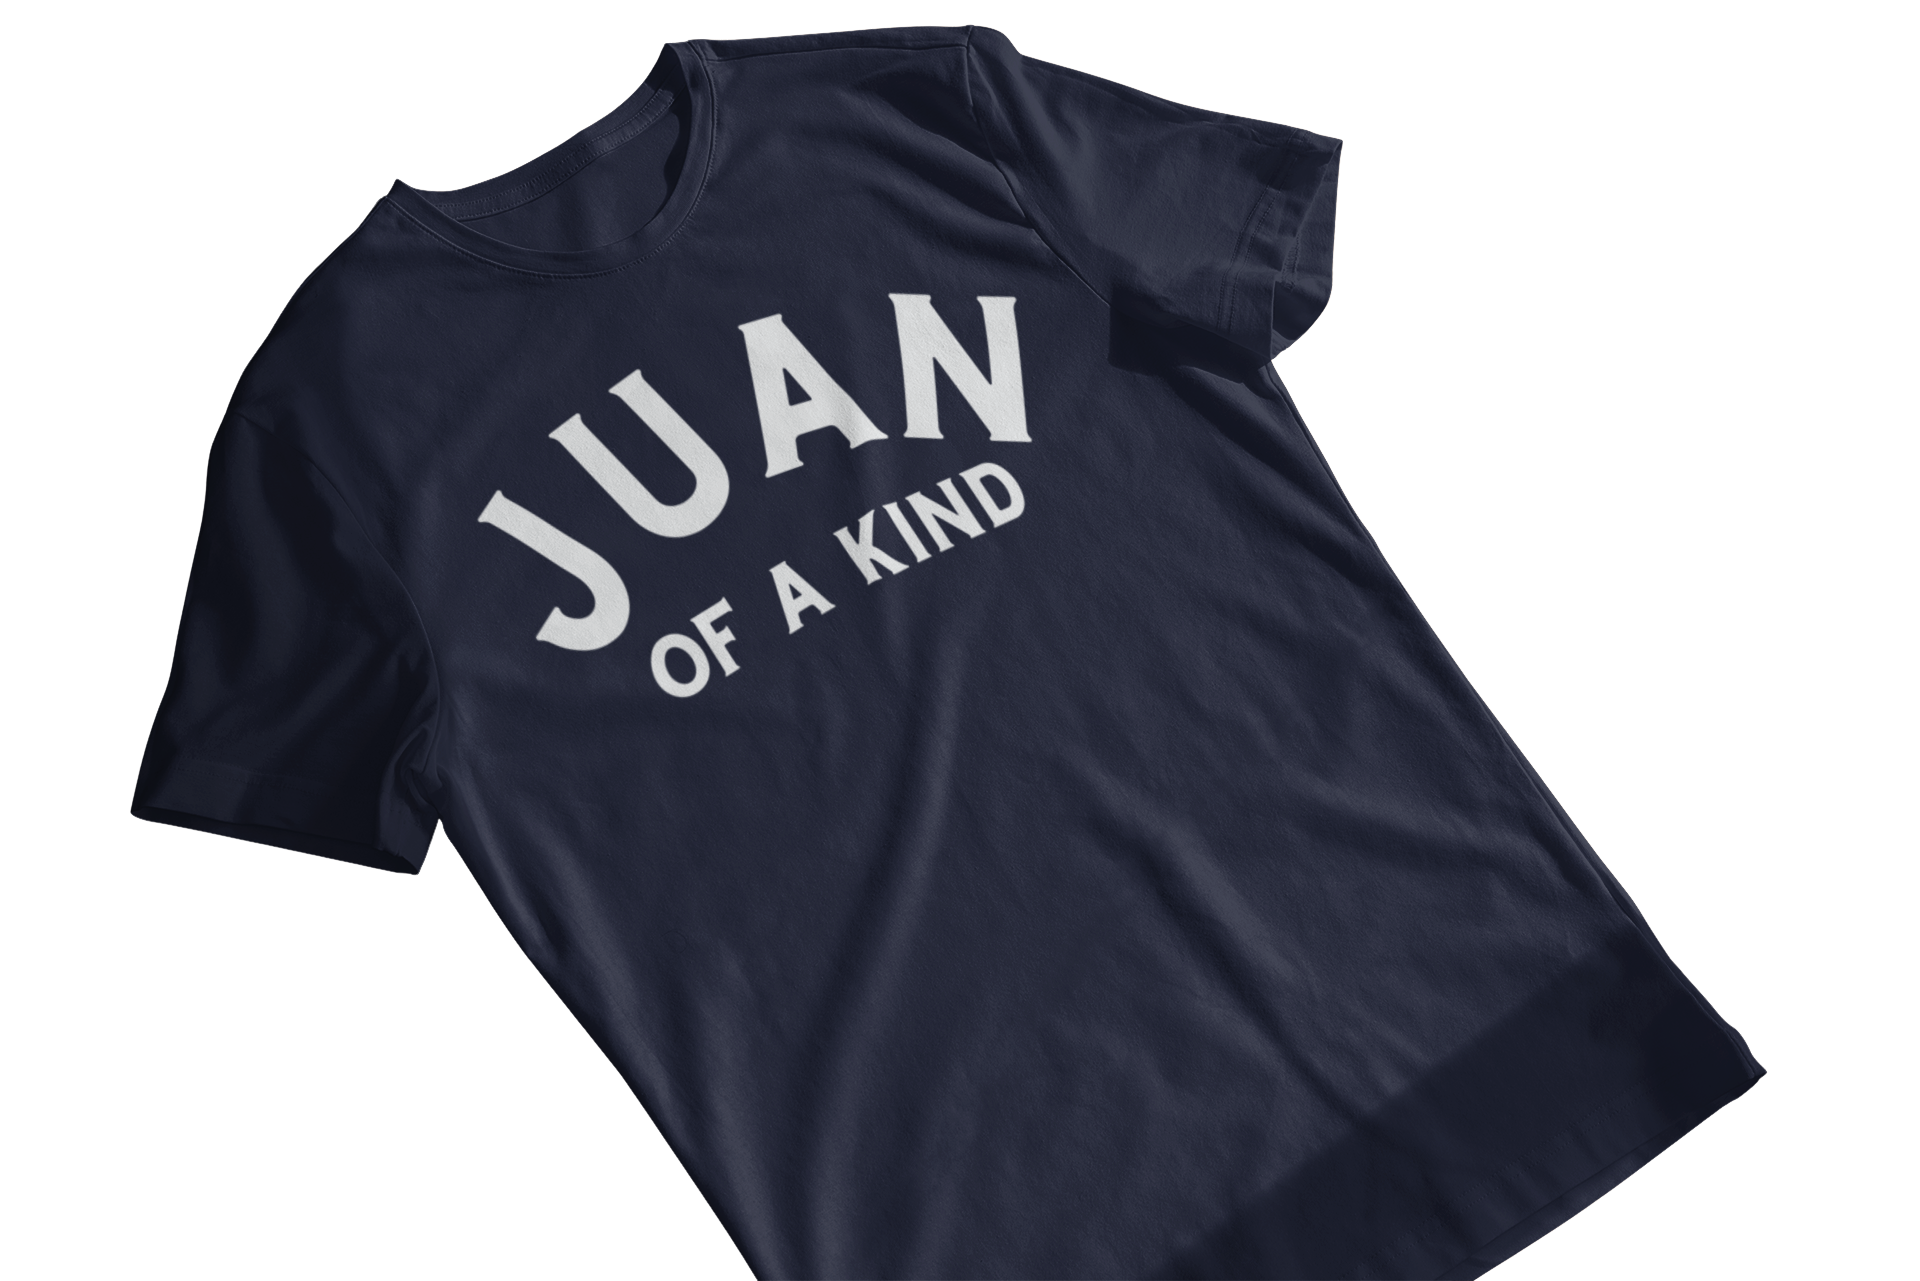 Juan Of A Kind Men's T-Shirt